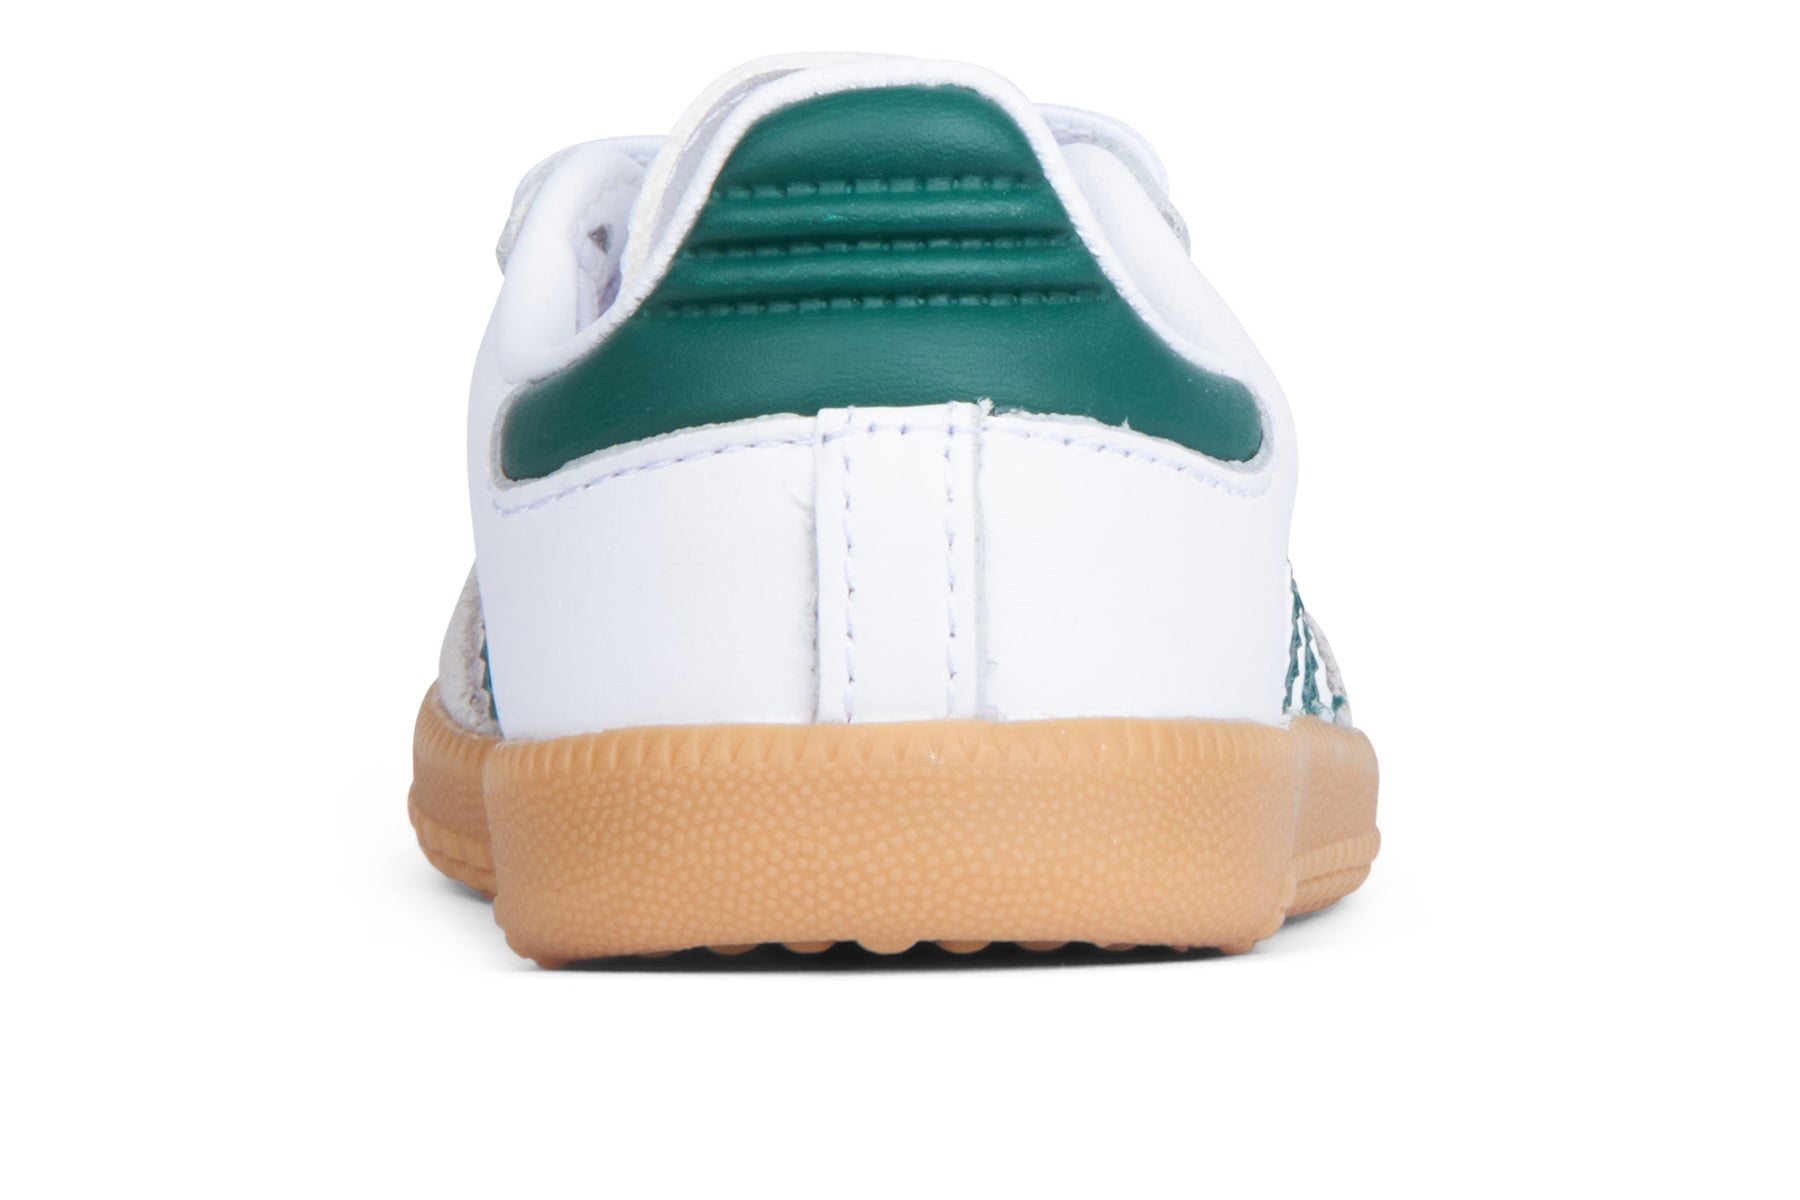 Adidas Samba OG EL I (Infants) - FTWR White/Core Green/Gum